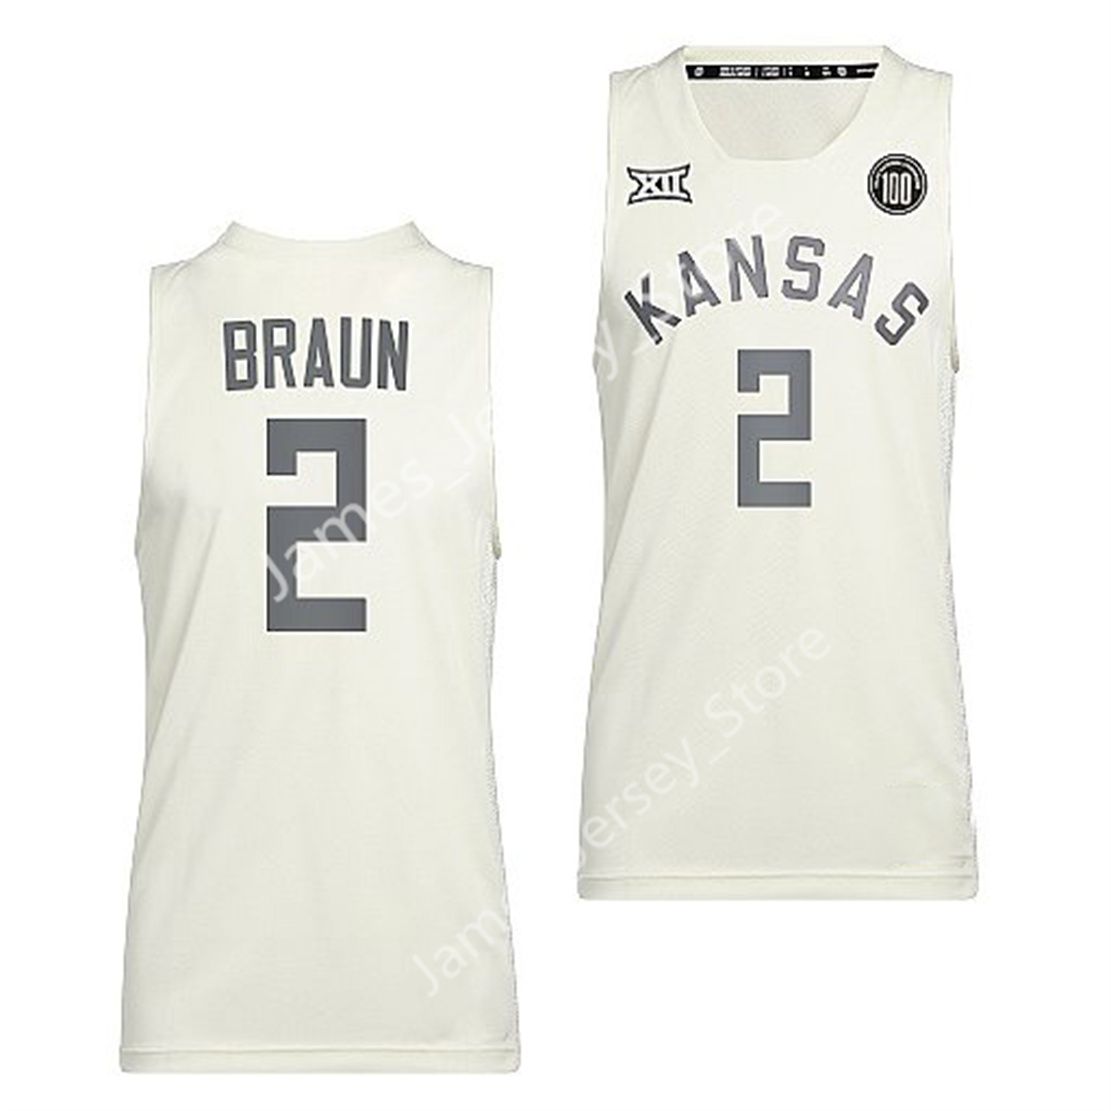 2 Christian Braun Basketball Jersey